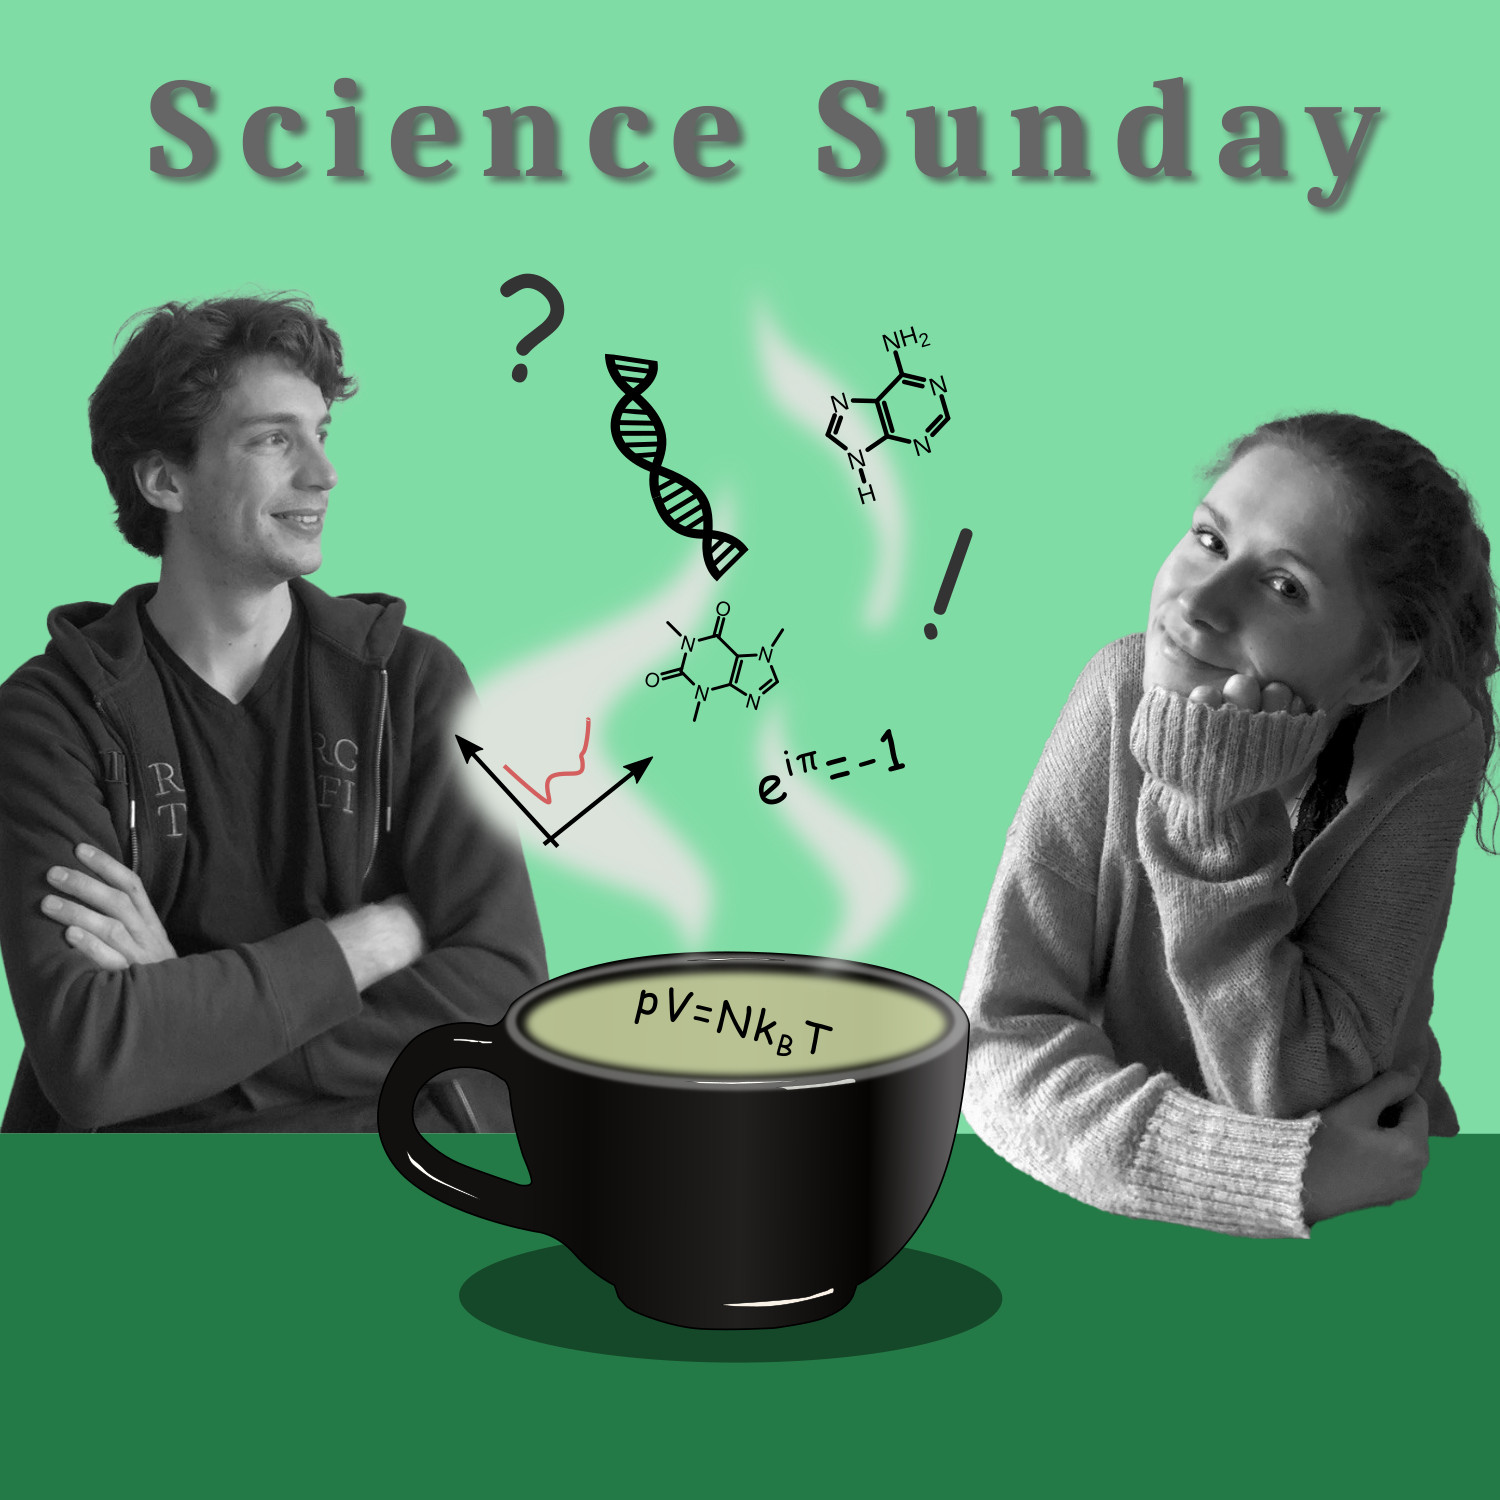 Science Sunday